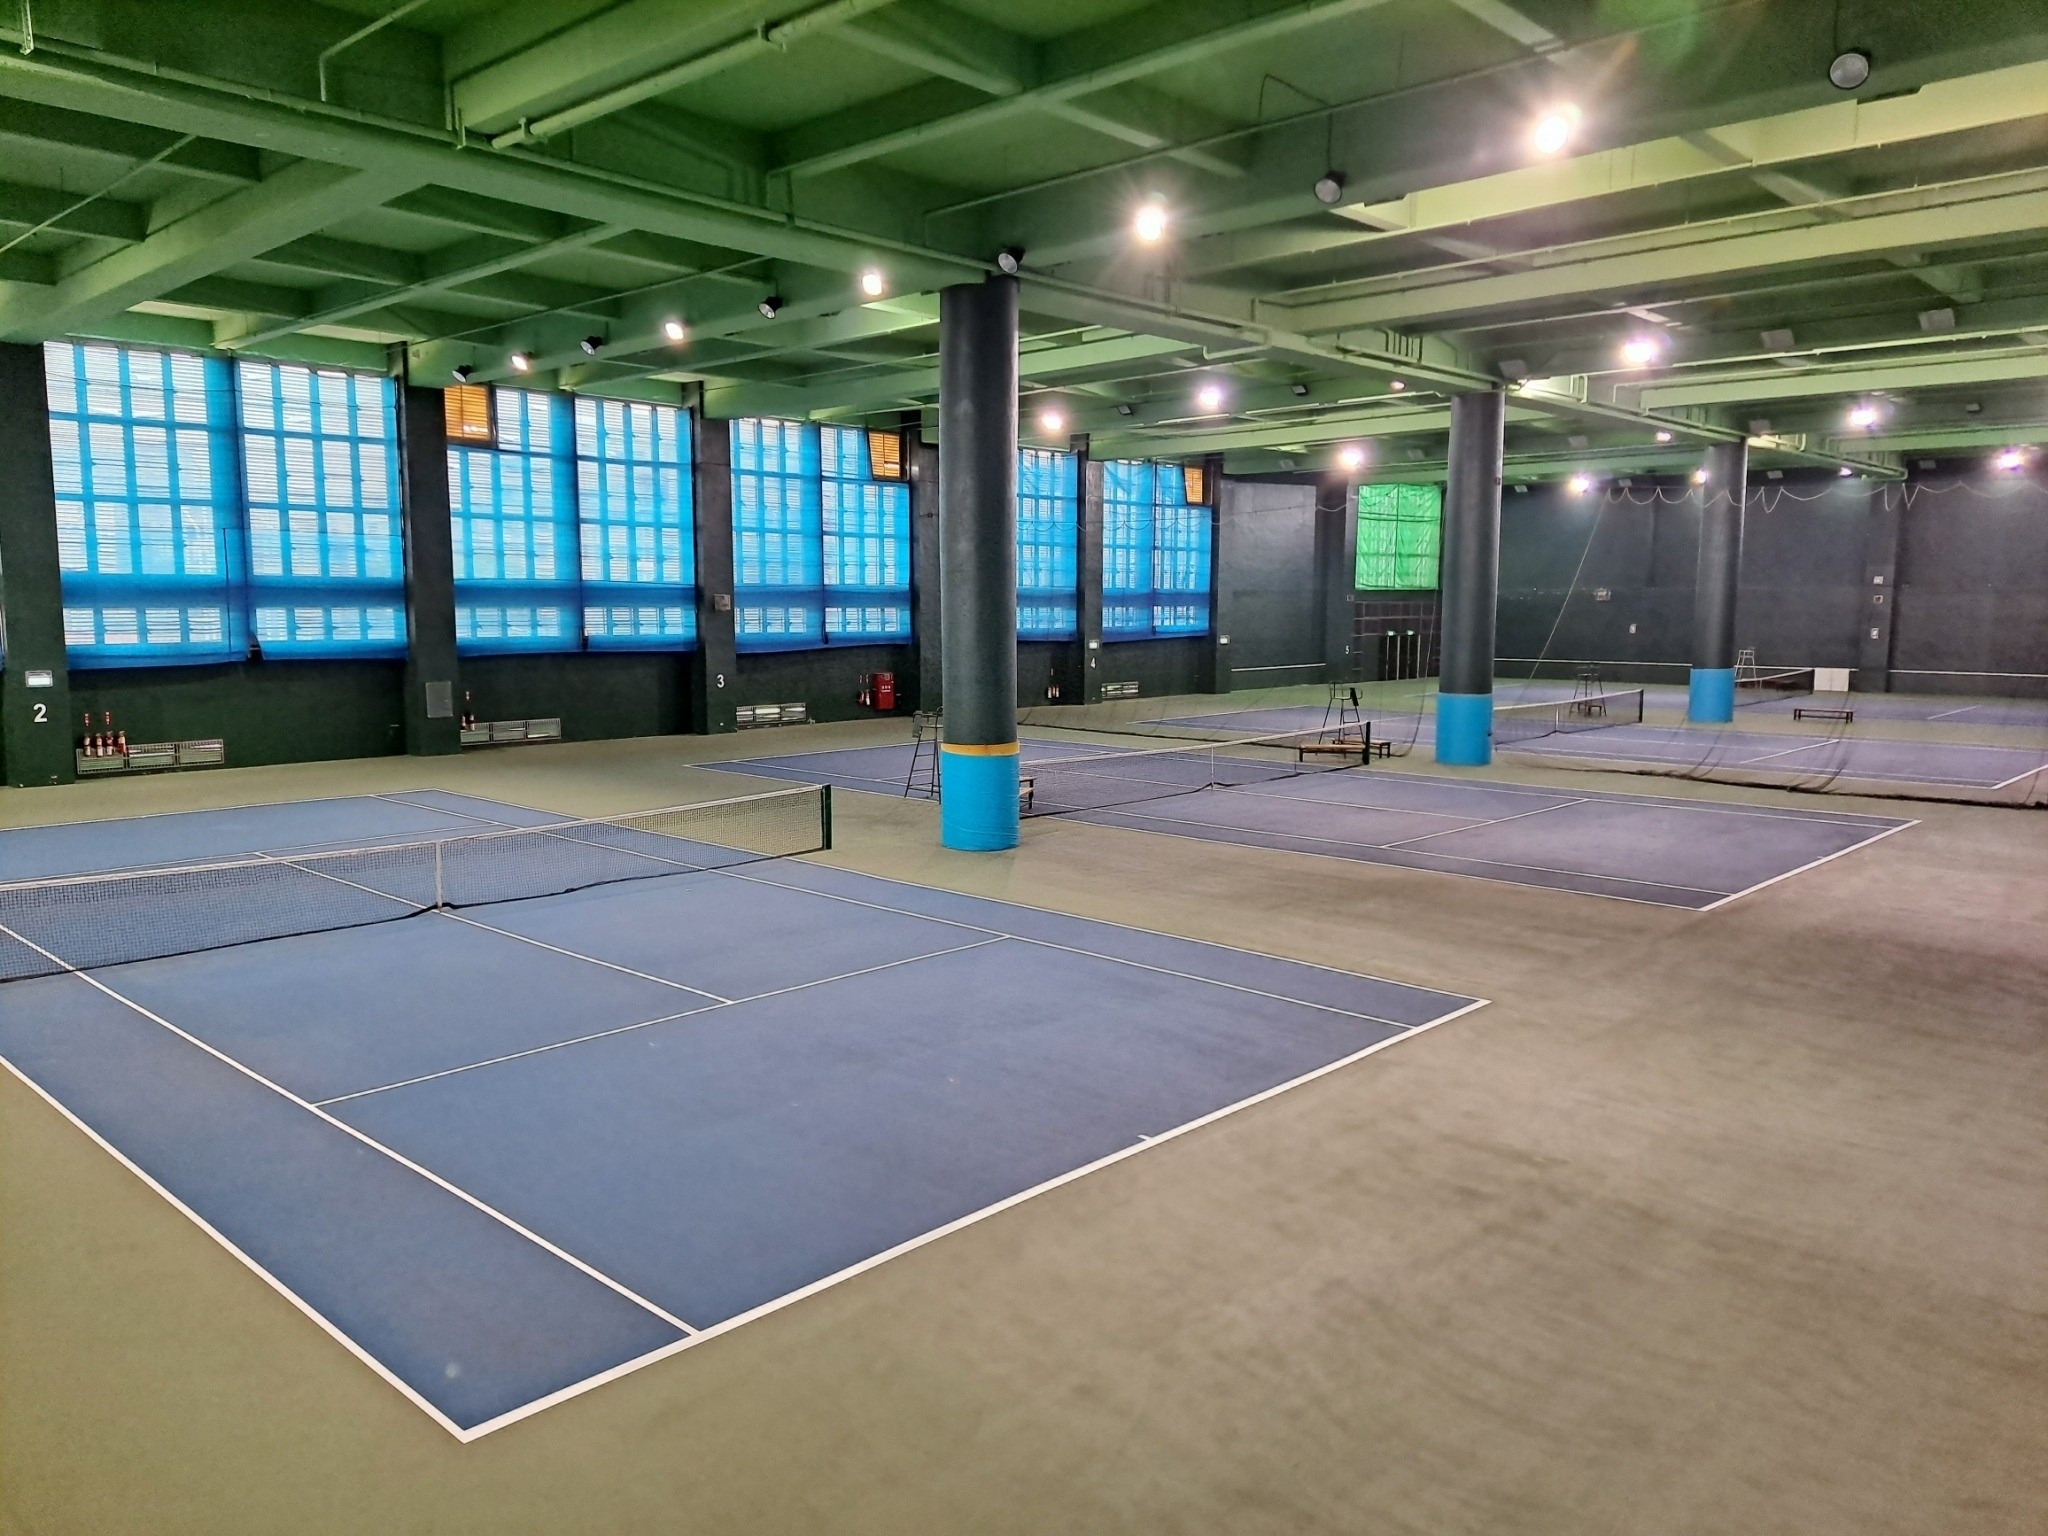 Figure 9. Tennis court